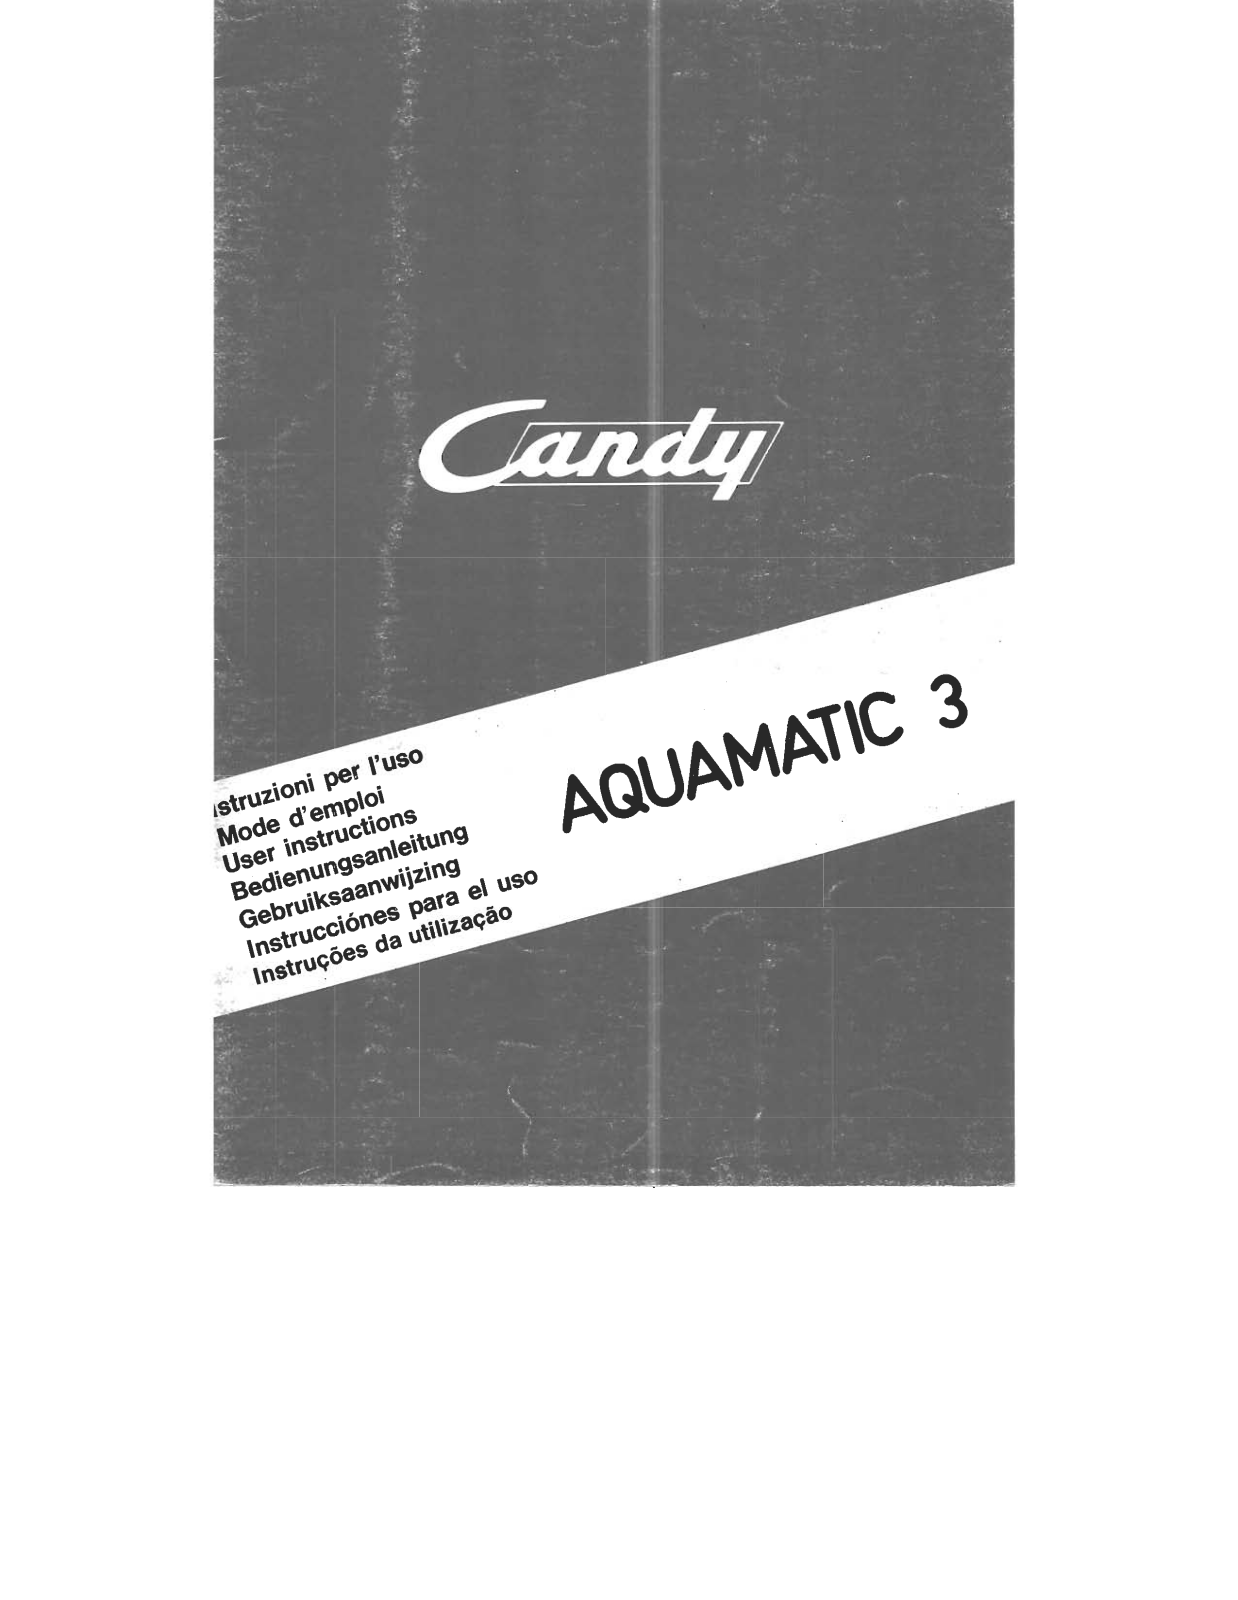 CANDY AQUA 3TB, Aquamatic 3 User Manual